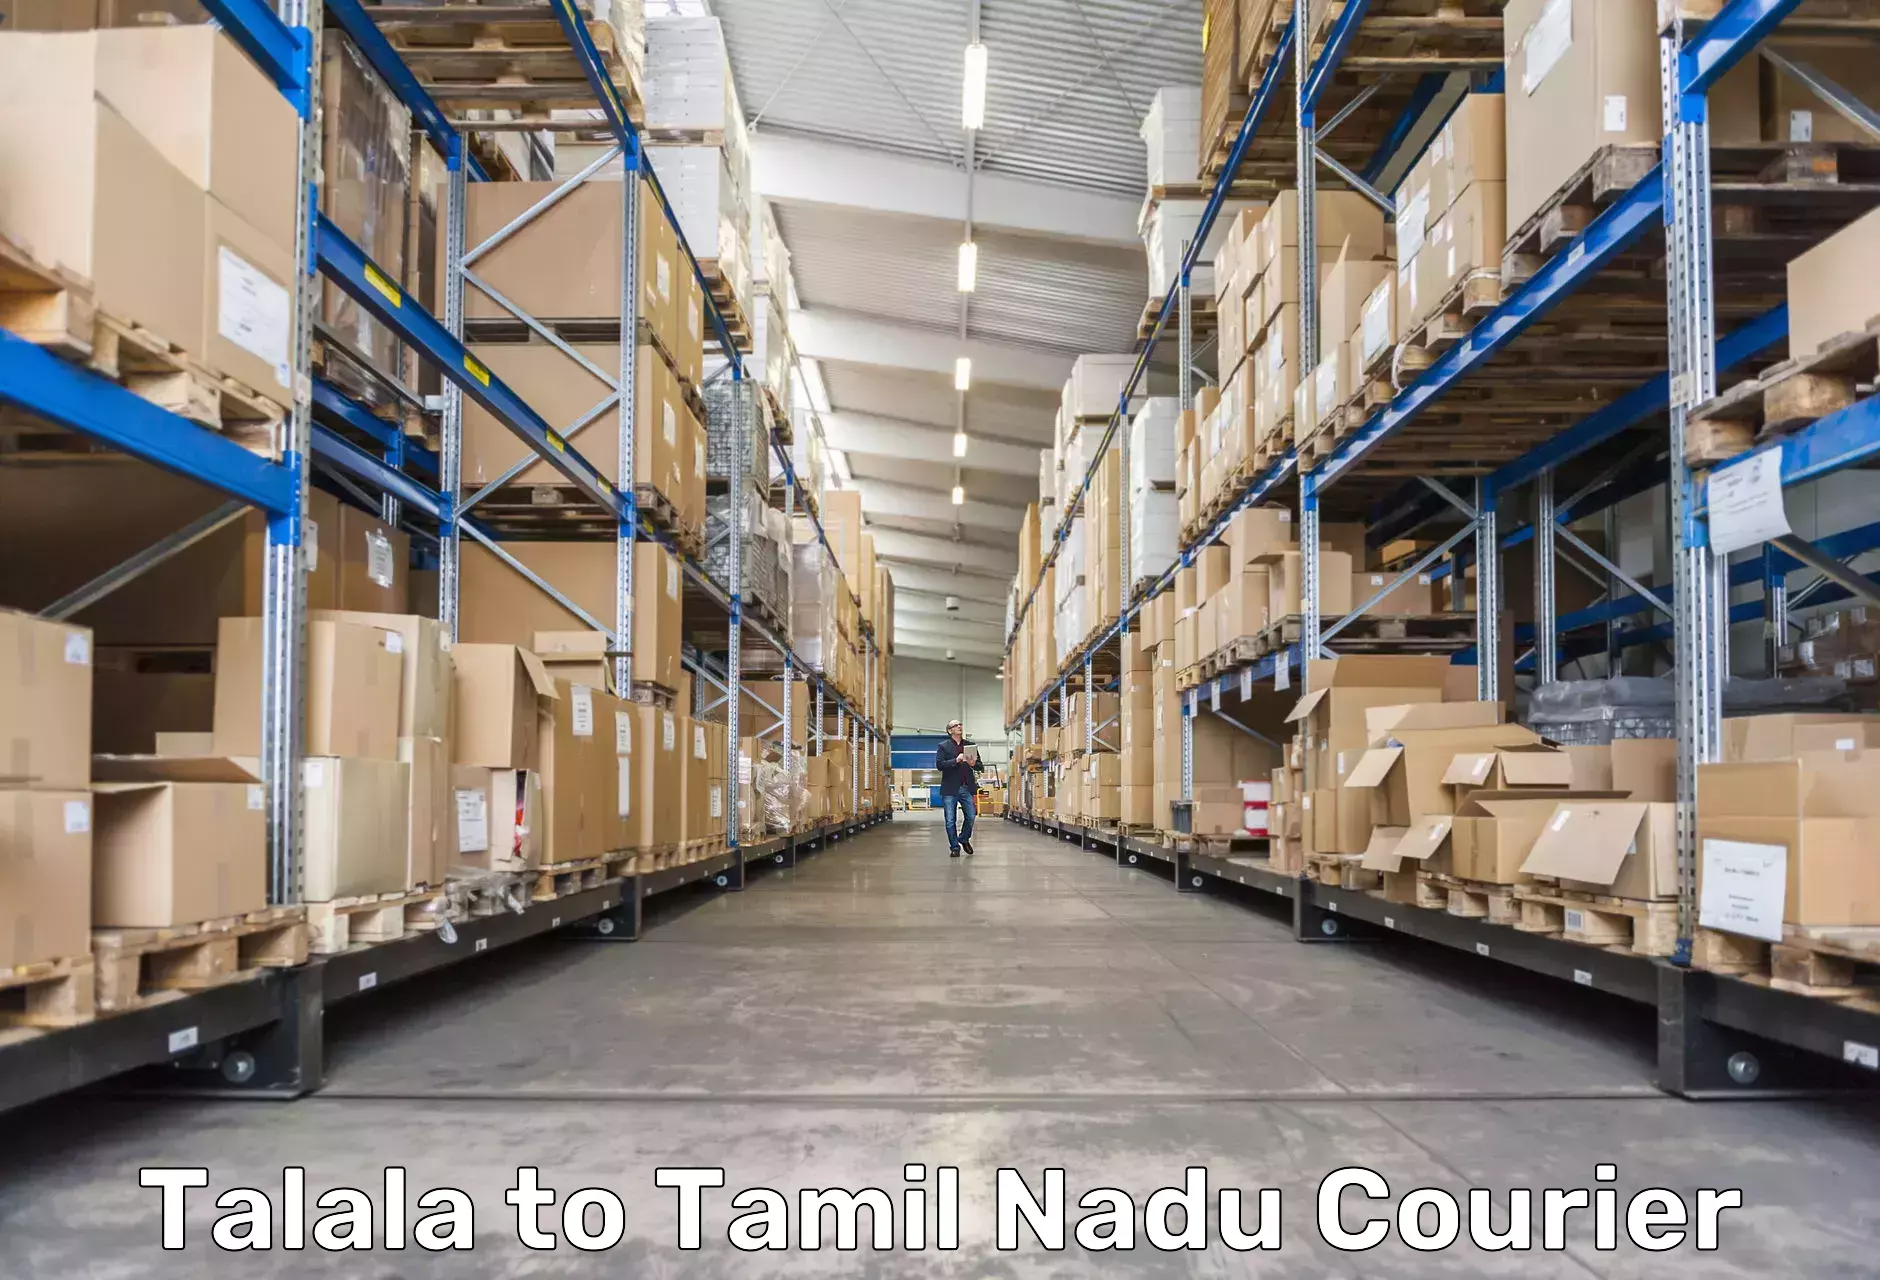 Courier service partnerships Talala to Tamil Nadu